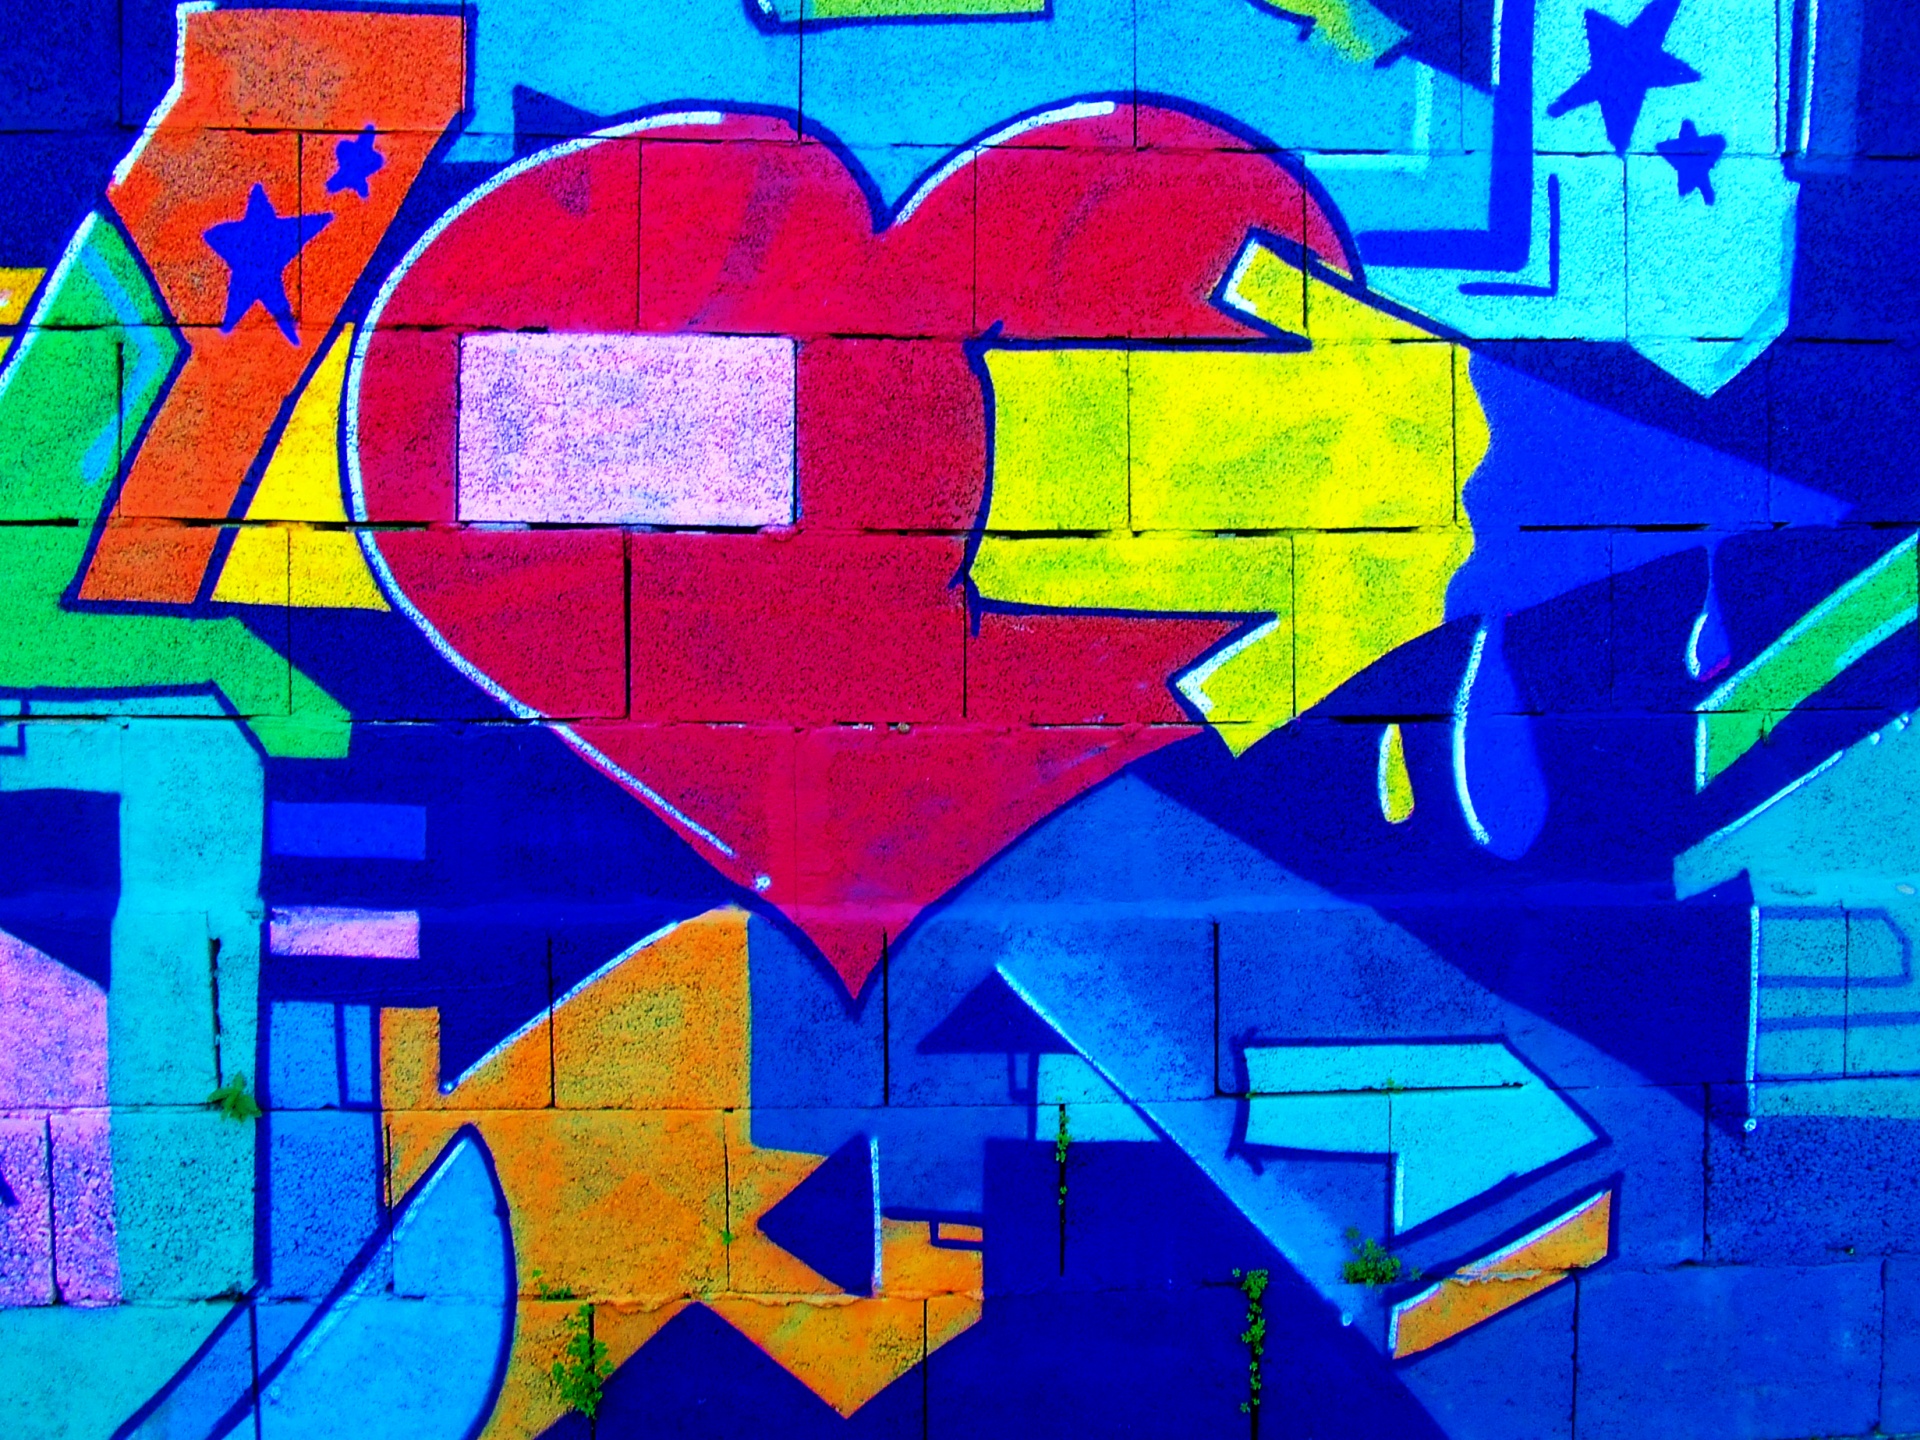 Graffiti,heart,love,symbol,romantic free image from